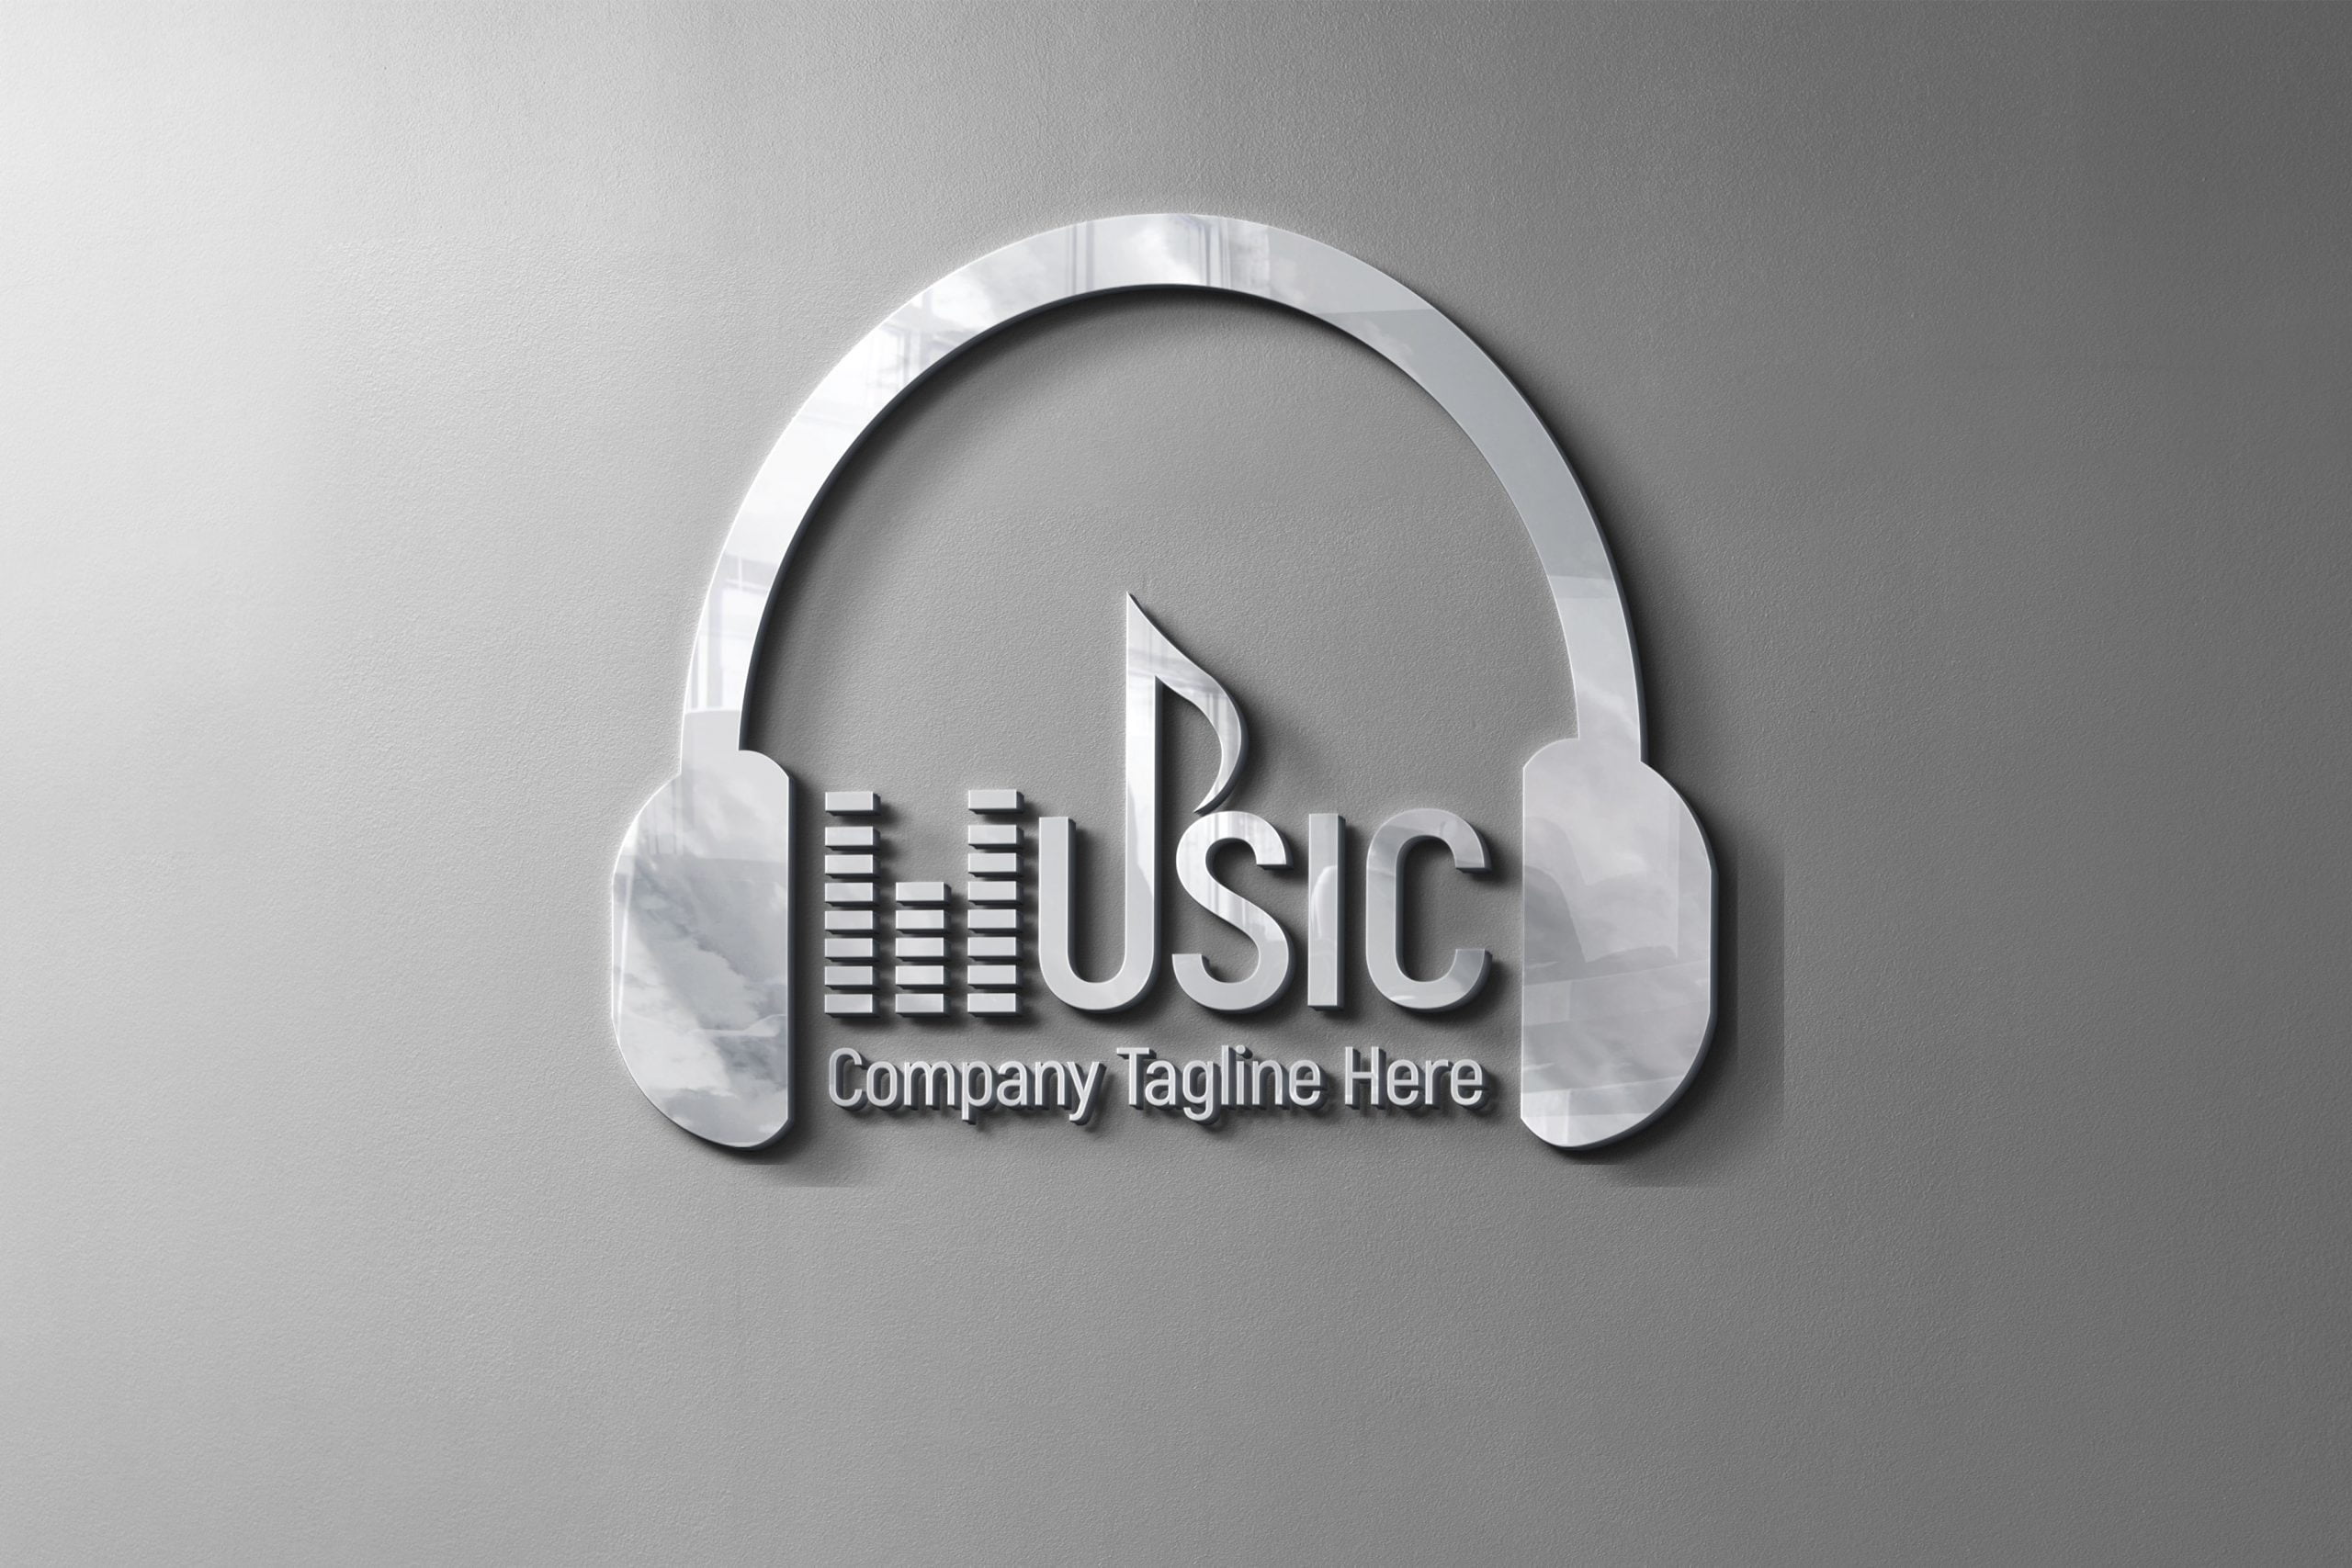 Free music logo design on wall presentation